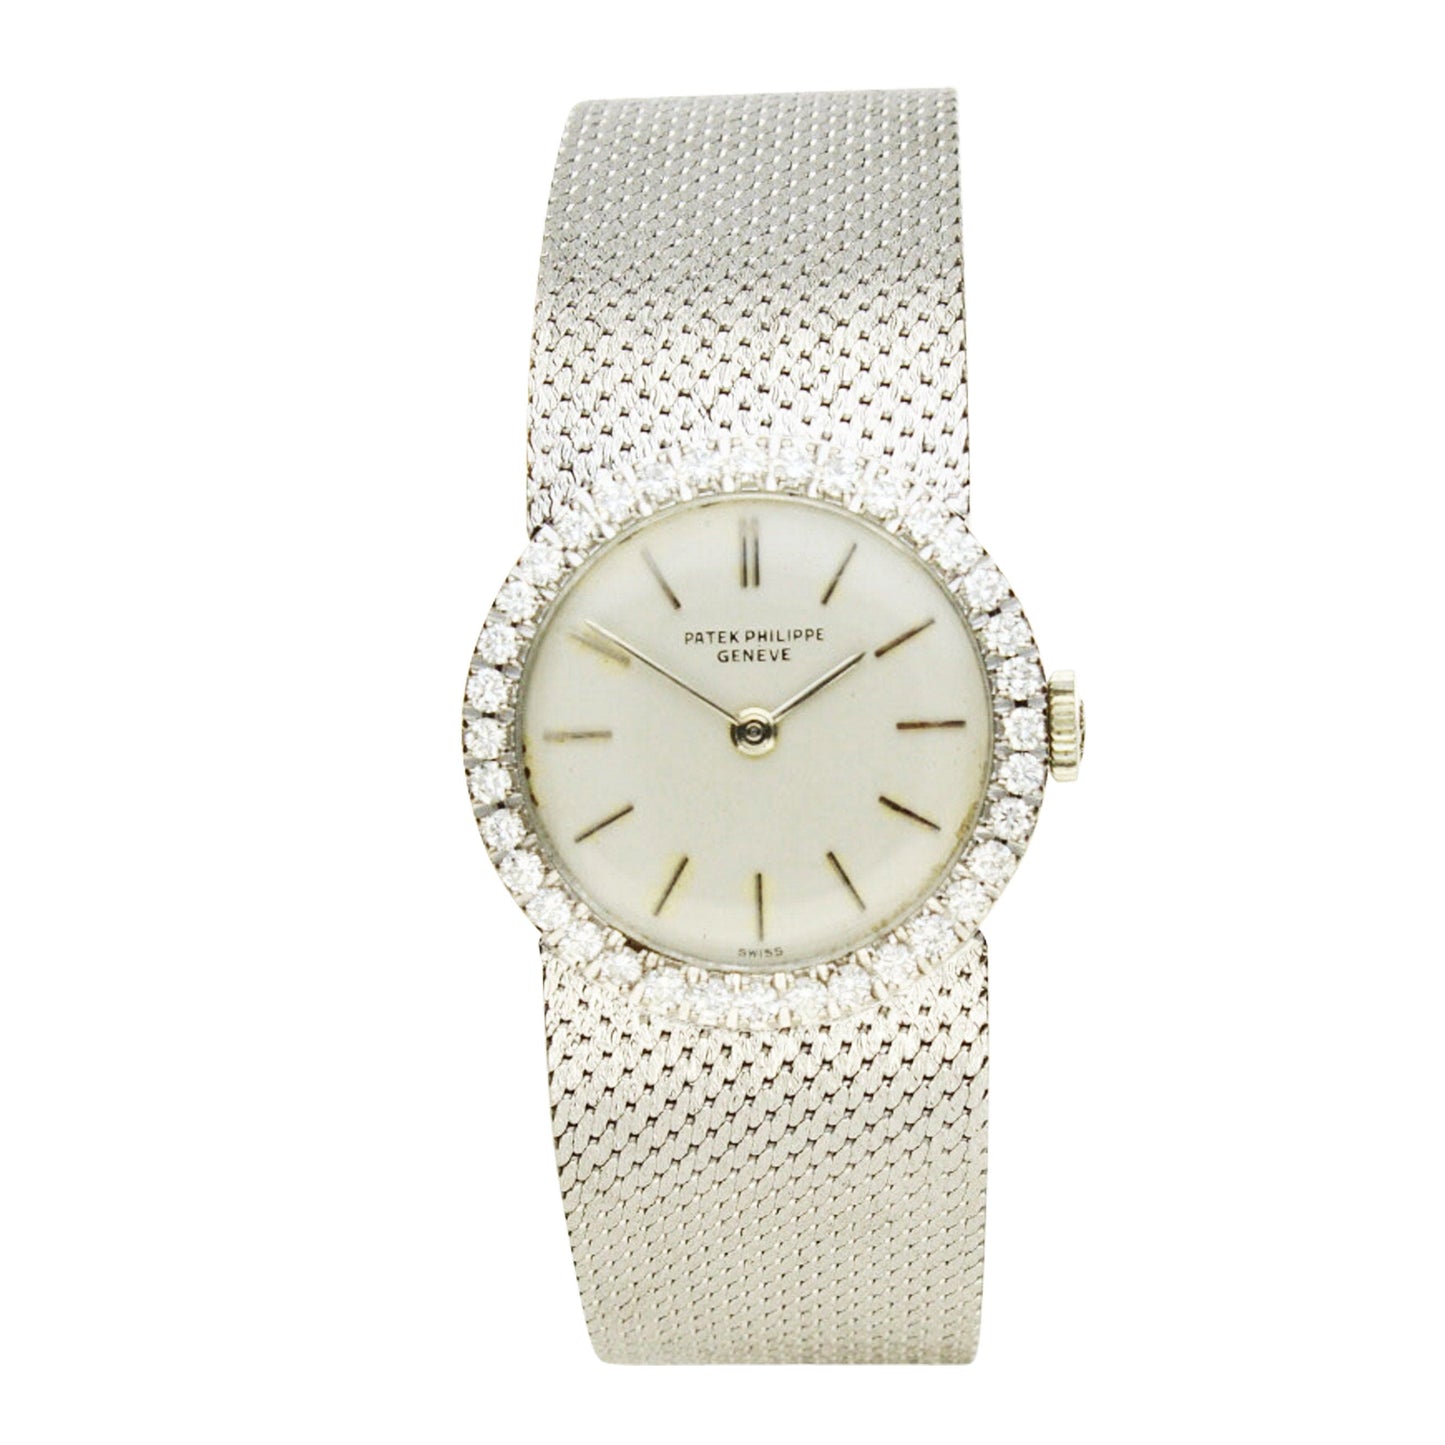 18ct white gold with diamond bezel bracelet watch. Made 1965